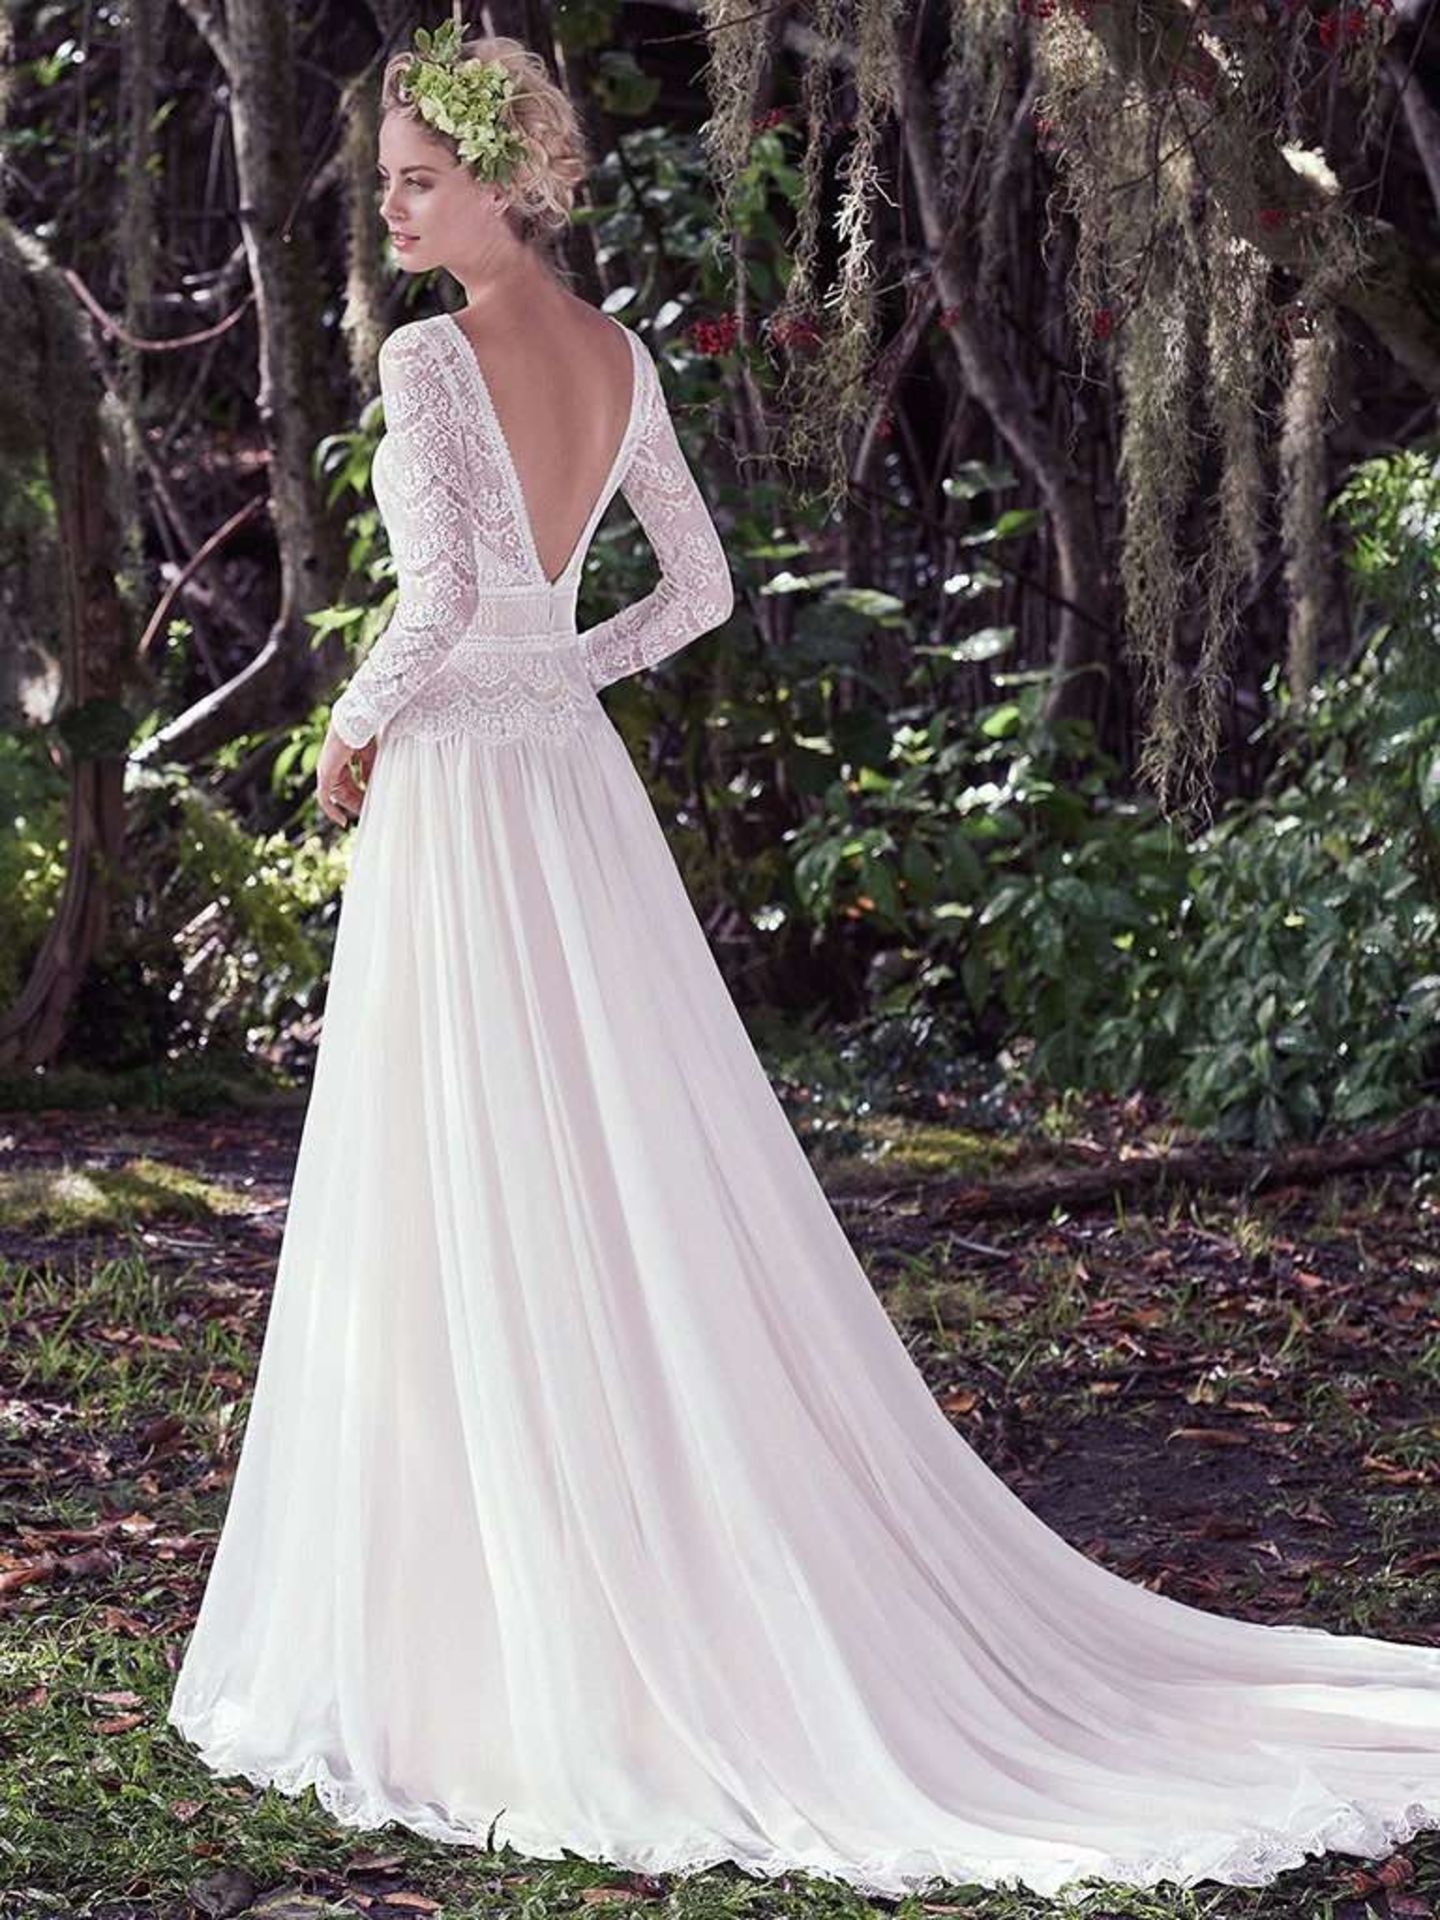 1 x MAGGIE SOTTERO 'Deirdre' Designer Wedding Dress Bridal Gown - Size: UK 10 - Original RRP £15,060 - Image 2 of 11